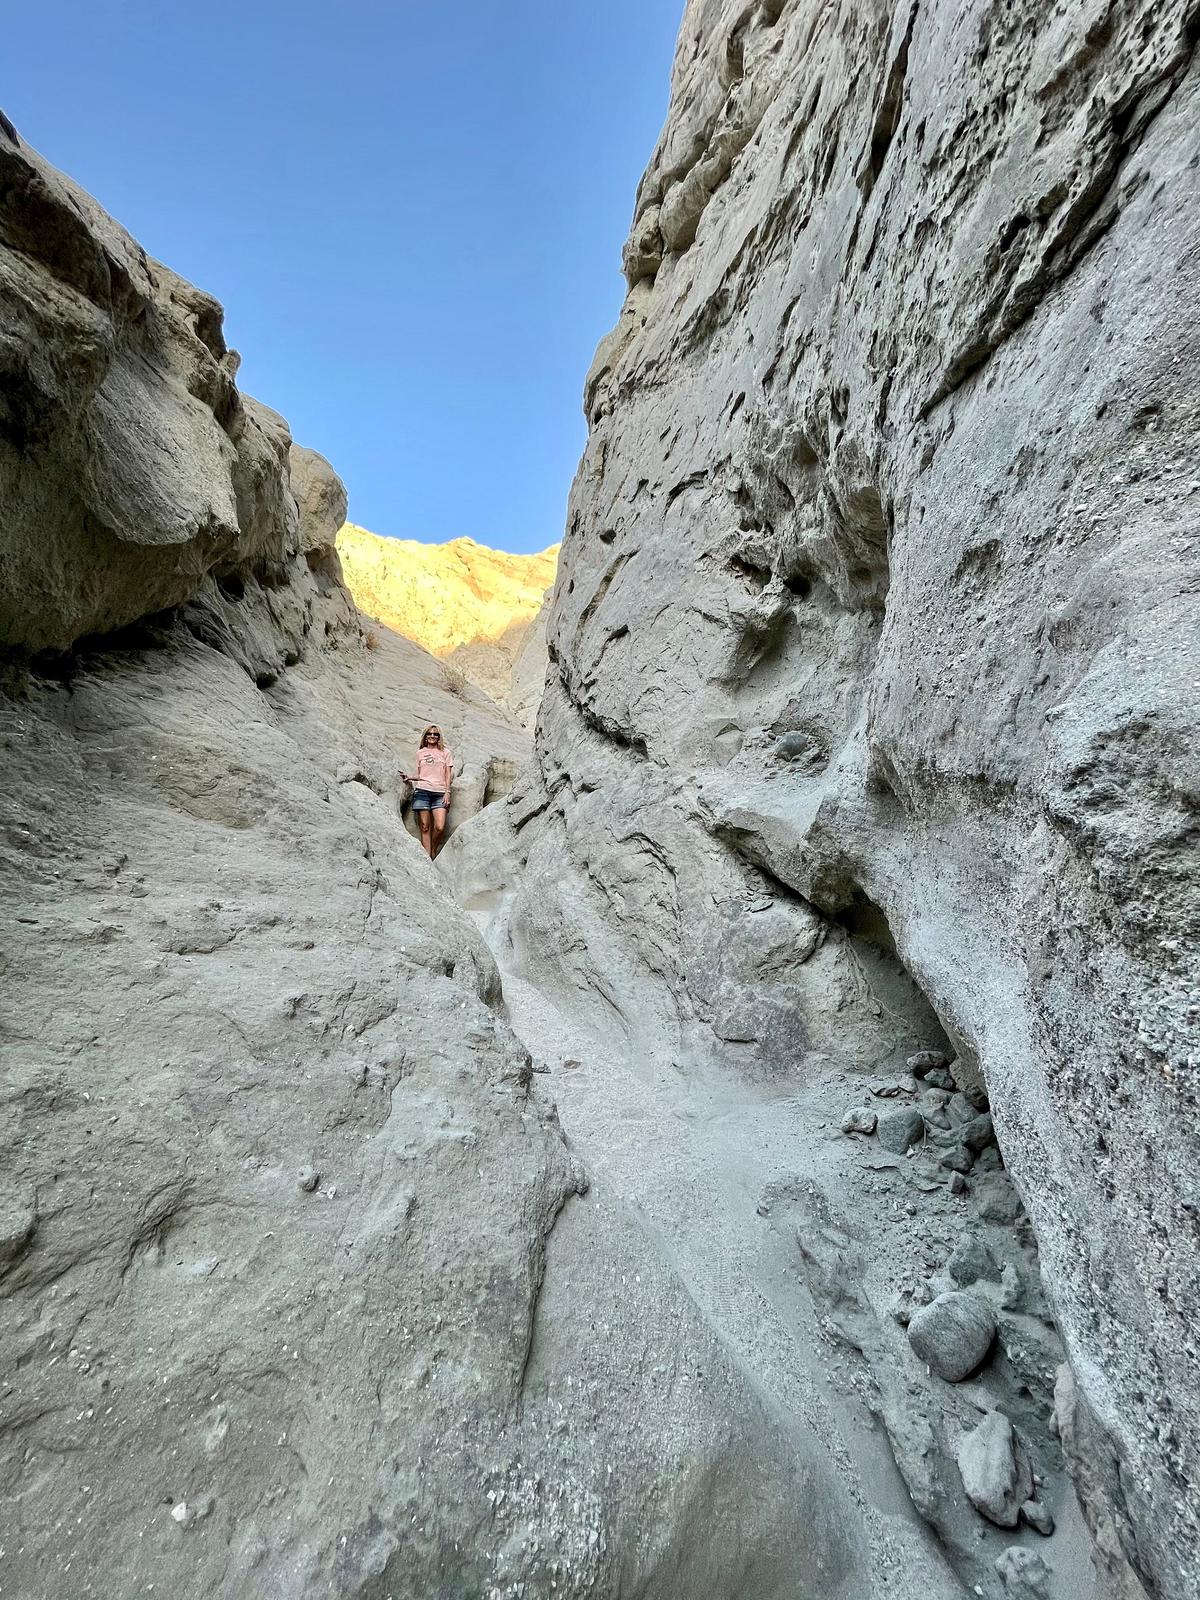 The author climbs through a slot canyon. (Janna Graber)